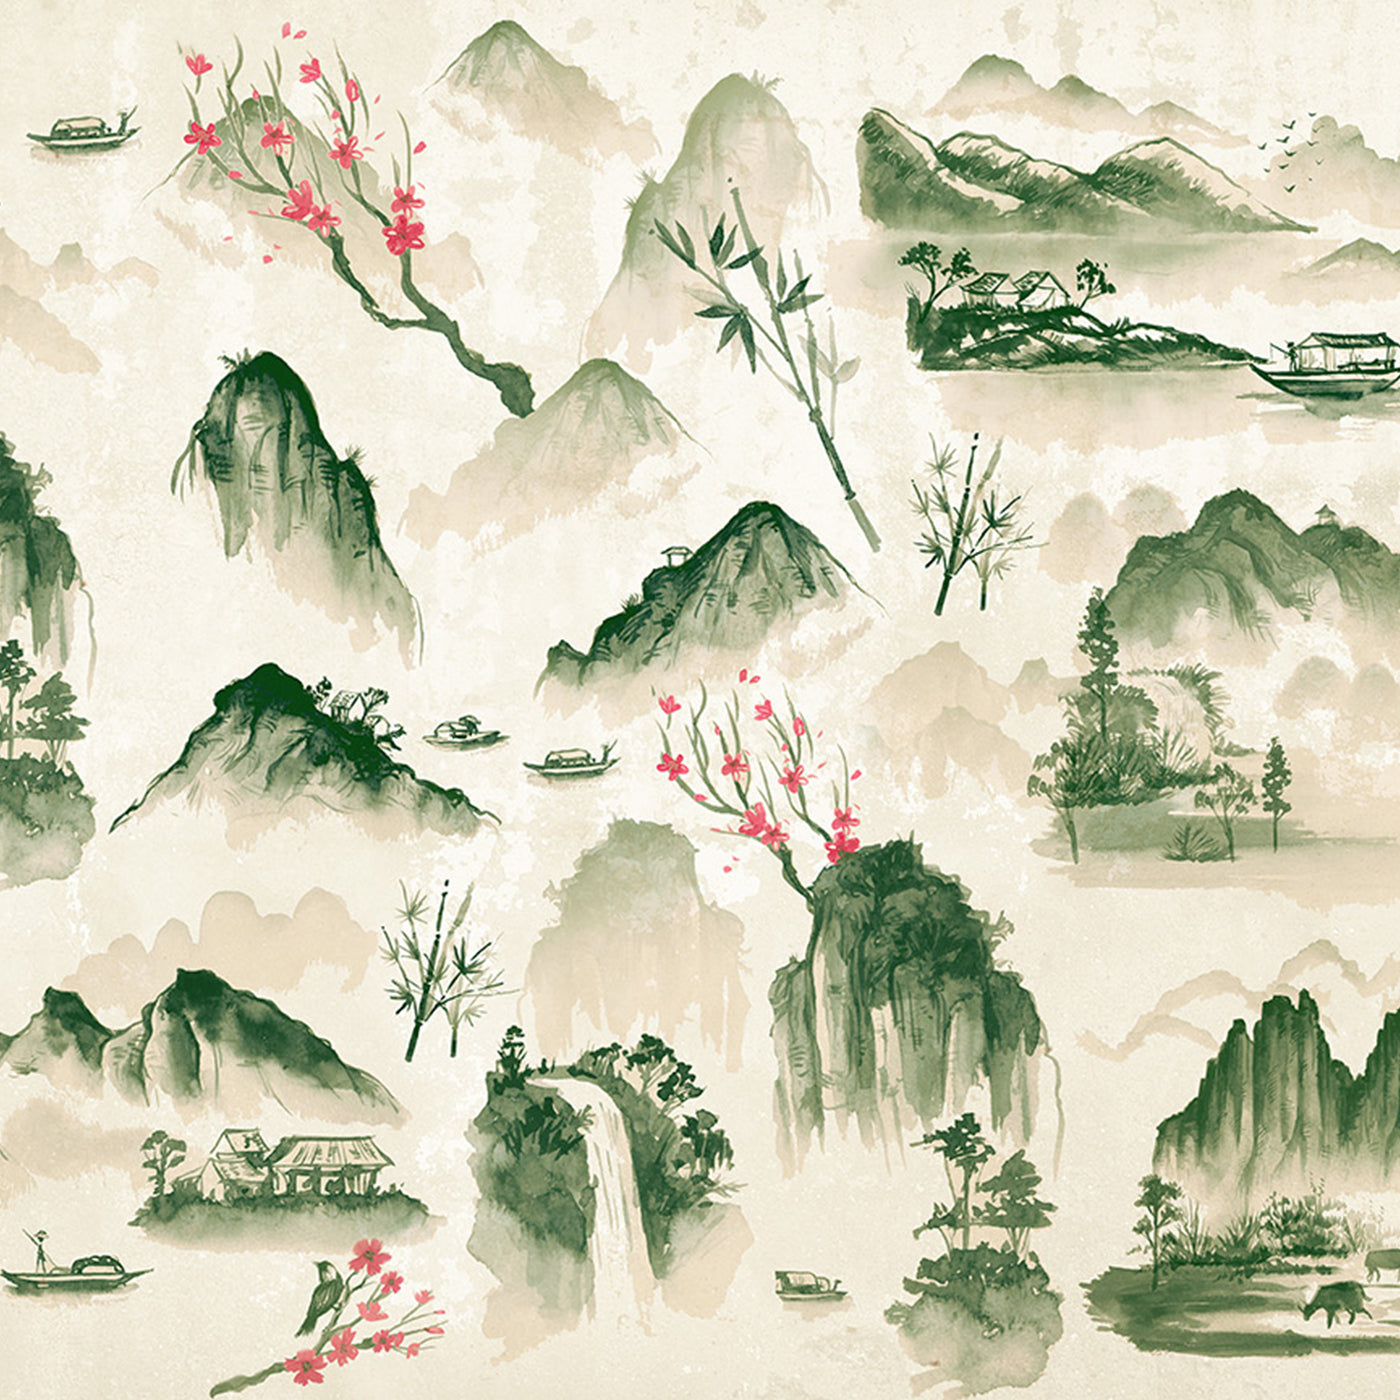 Kunisaki Wallpaper by Matteo Stucchi #2 - Alternative view 1